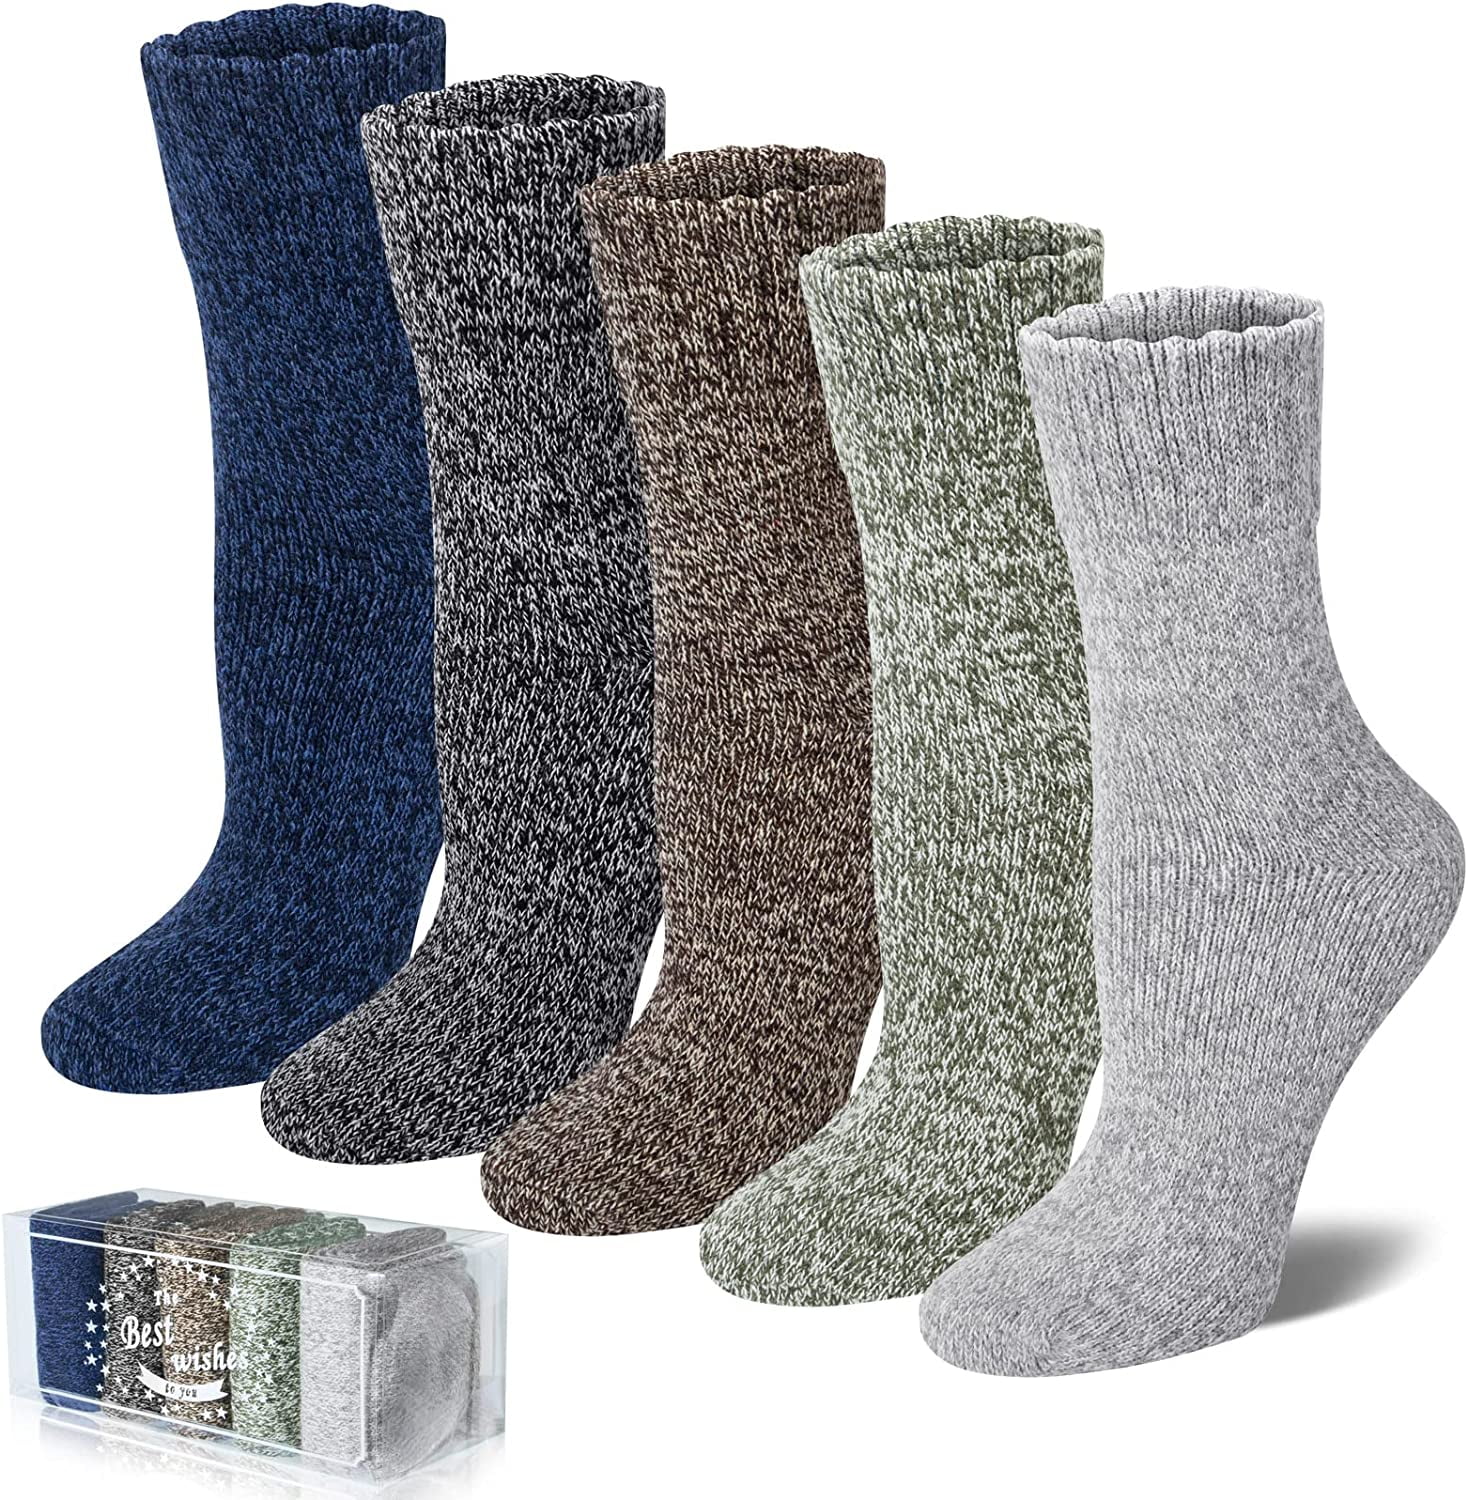 Thermal Socks Merino Wool Socks For Women and Men - 3 Pairs of Extra-Mens  Warm Socks, Winter Socks, Hiking Socks, Boot Socks by Debra Weitzner